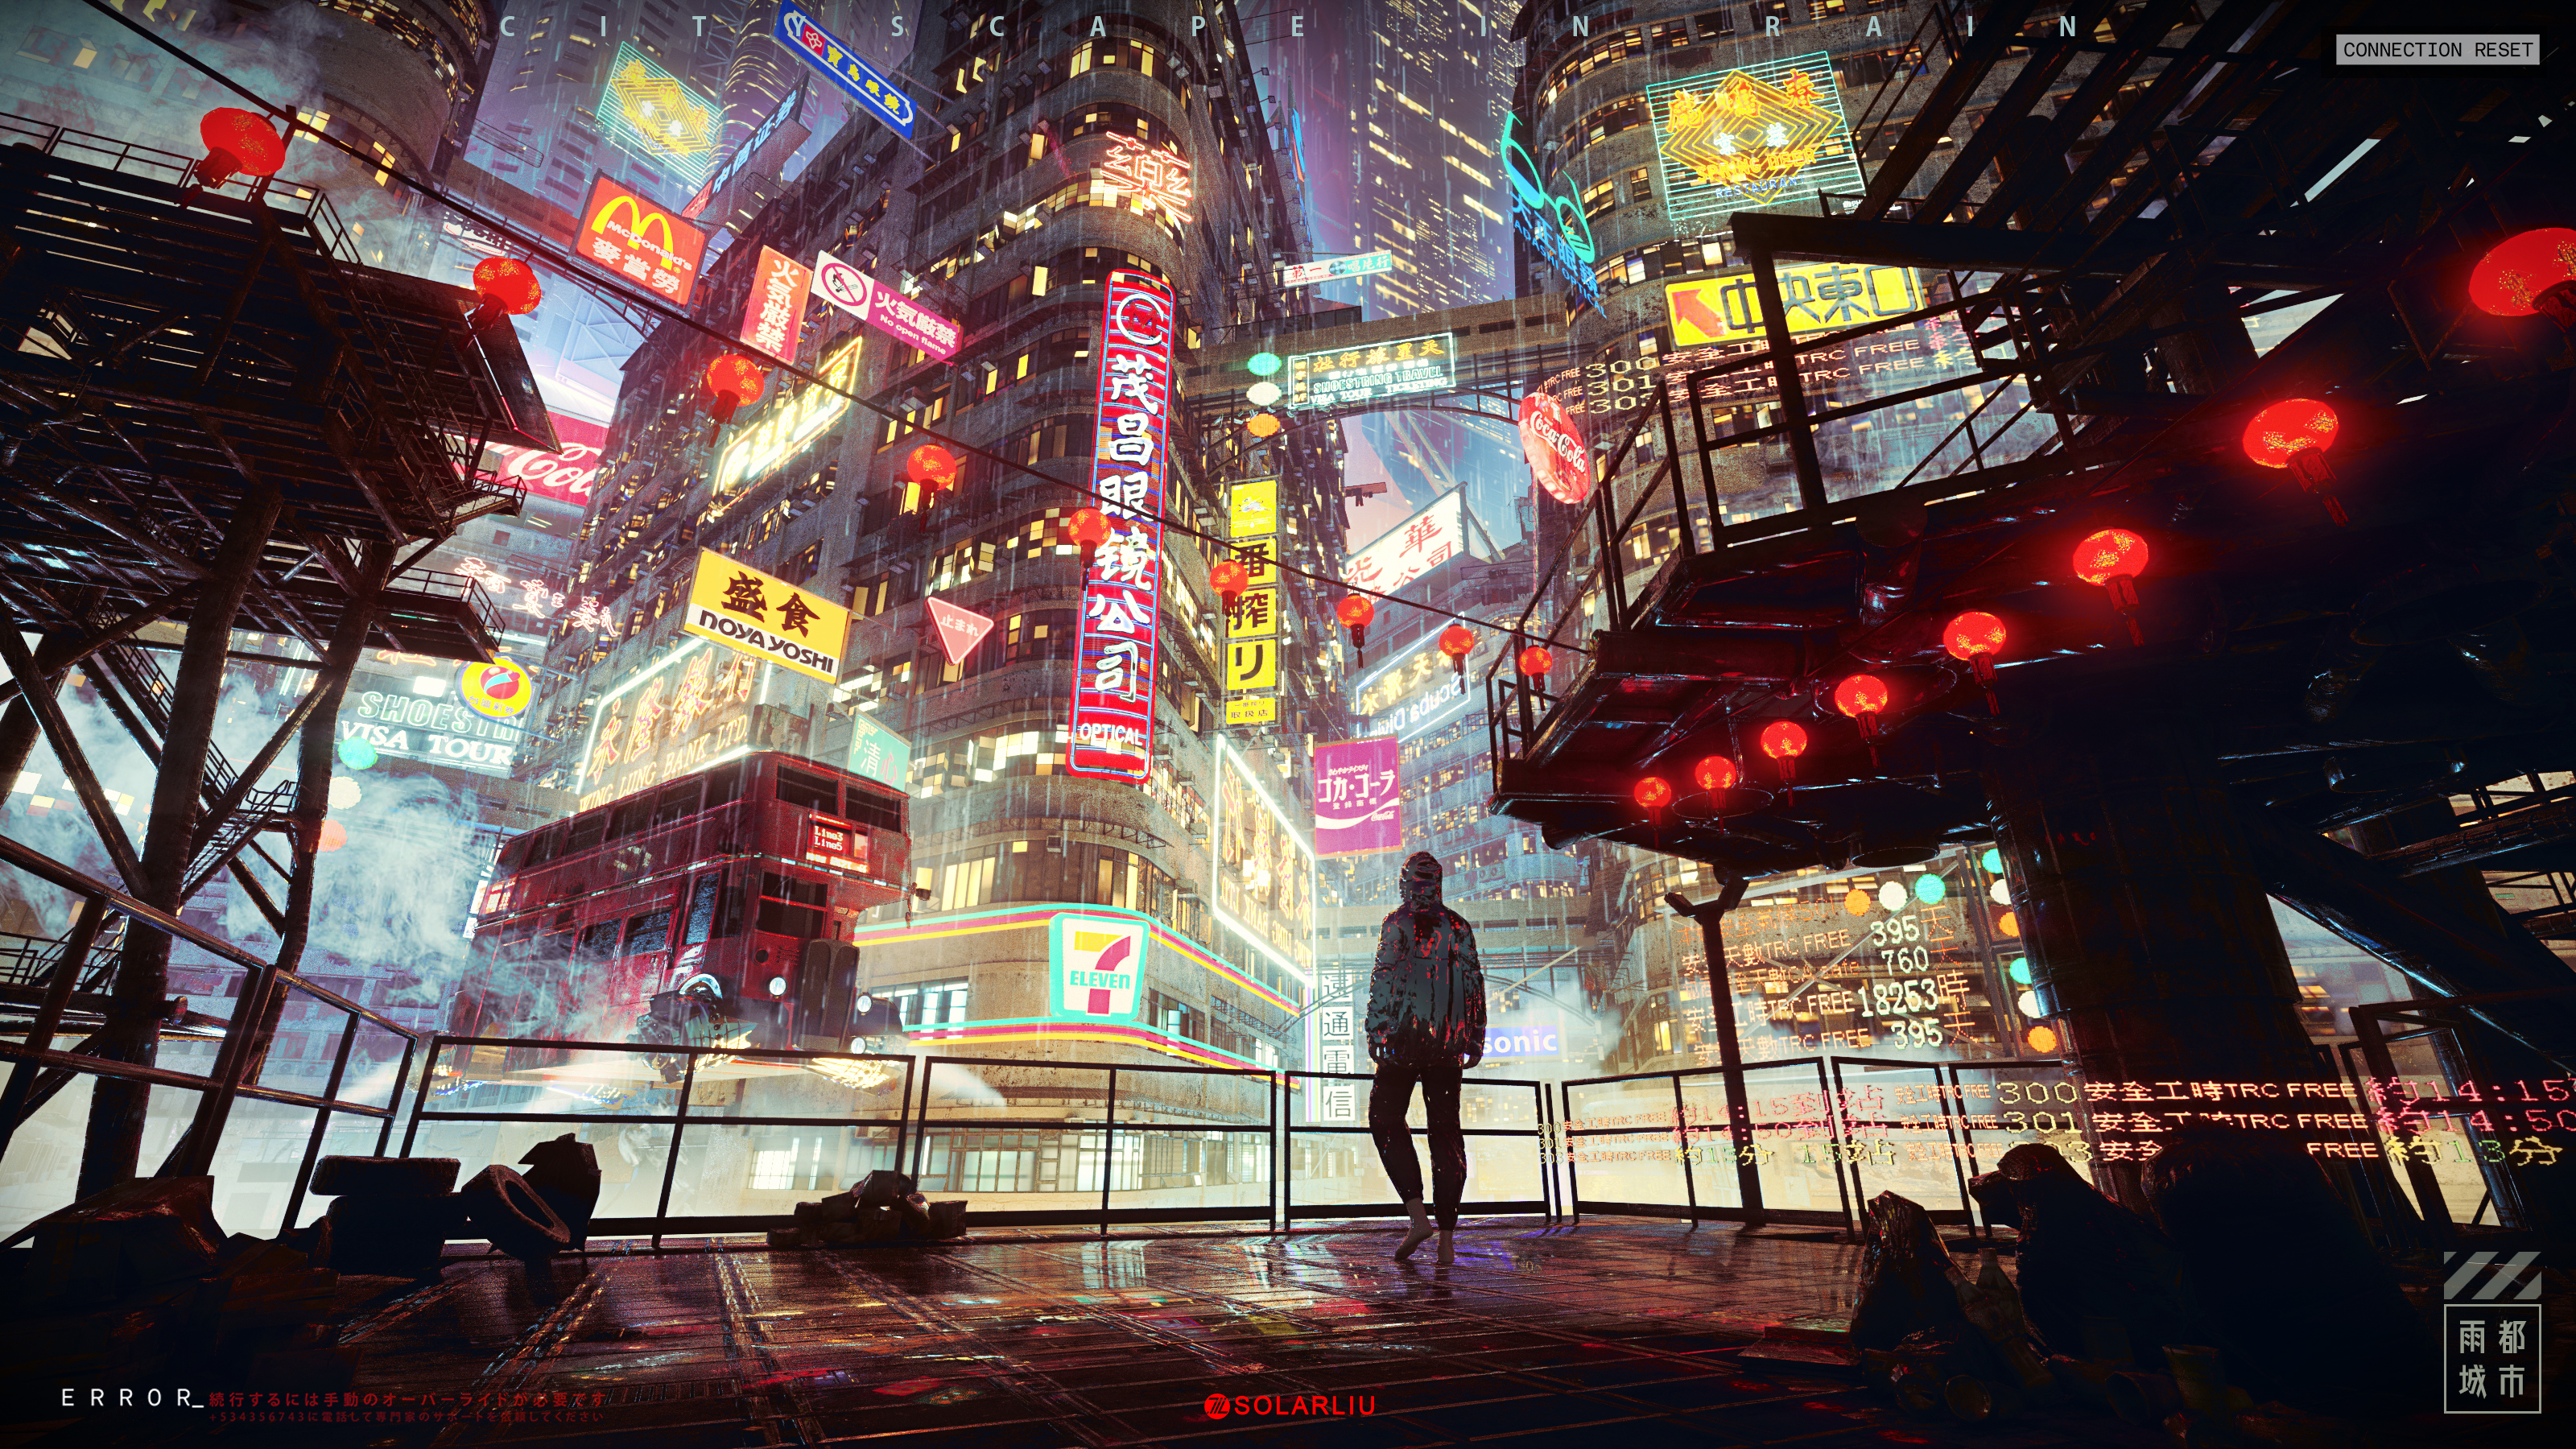 General 3200x1800 city architecture science fiction digital art rain cityscape cyberpunk artwork kanji Solarliu